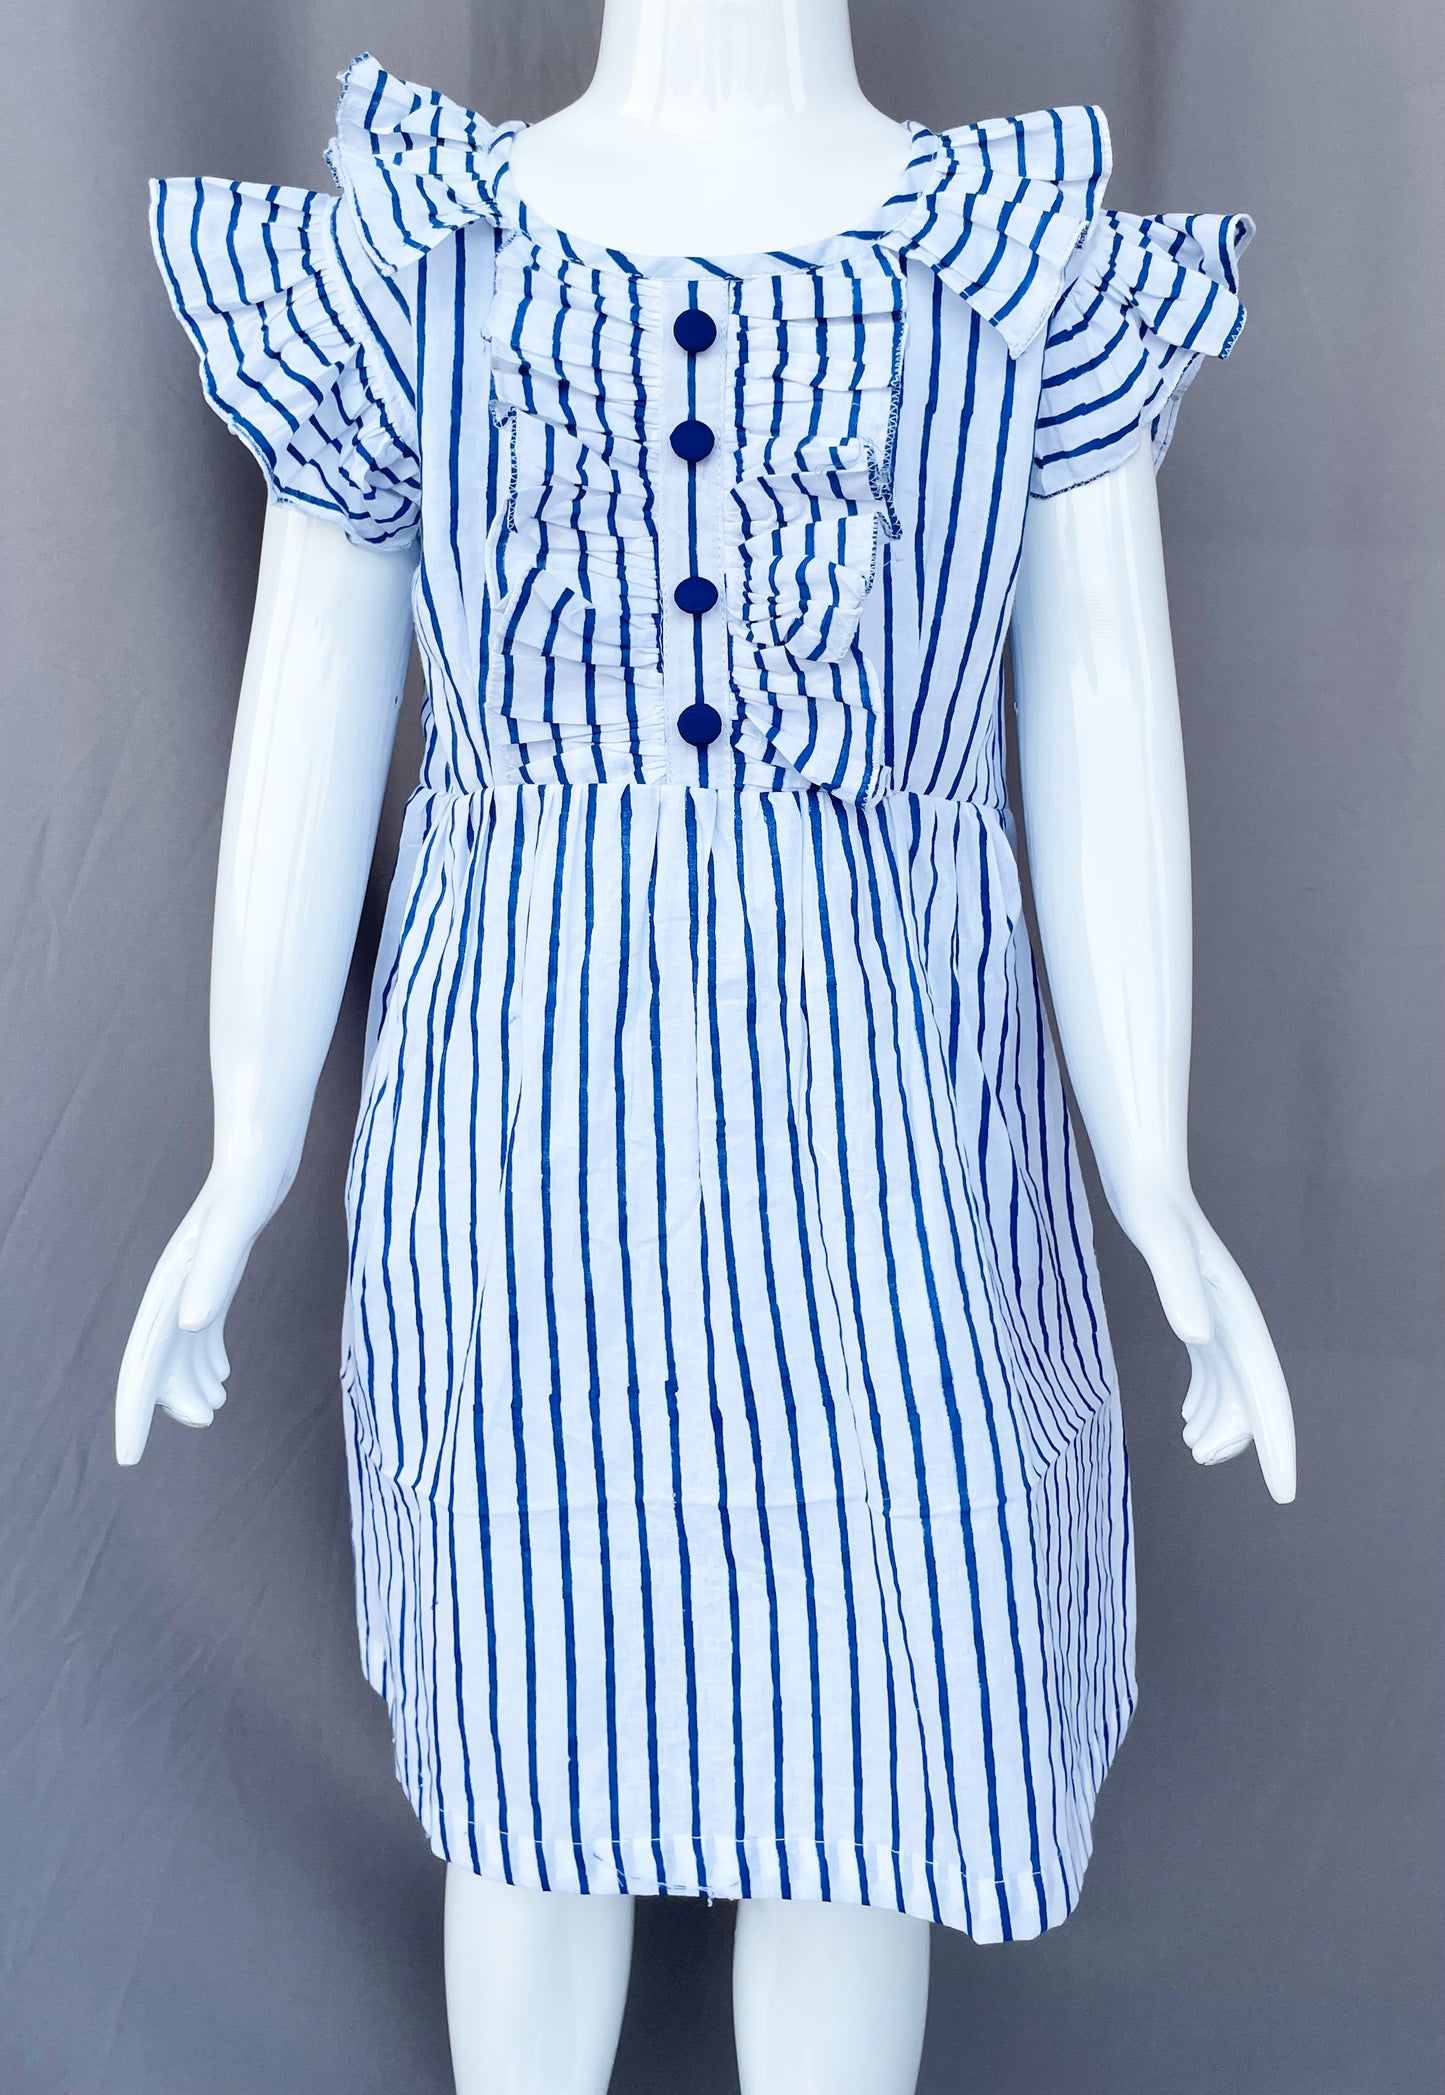 Blue Striped Cotton Dress, Summer wear for Girls, White Frock for Girl Child